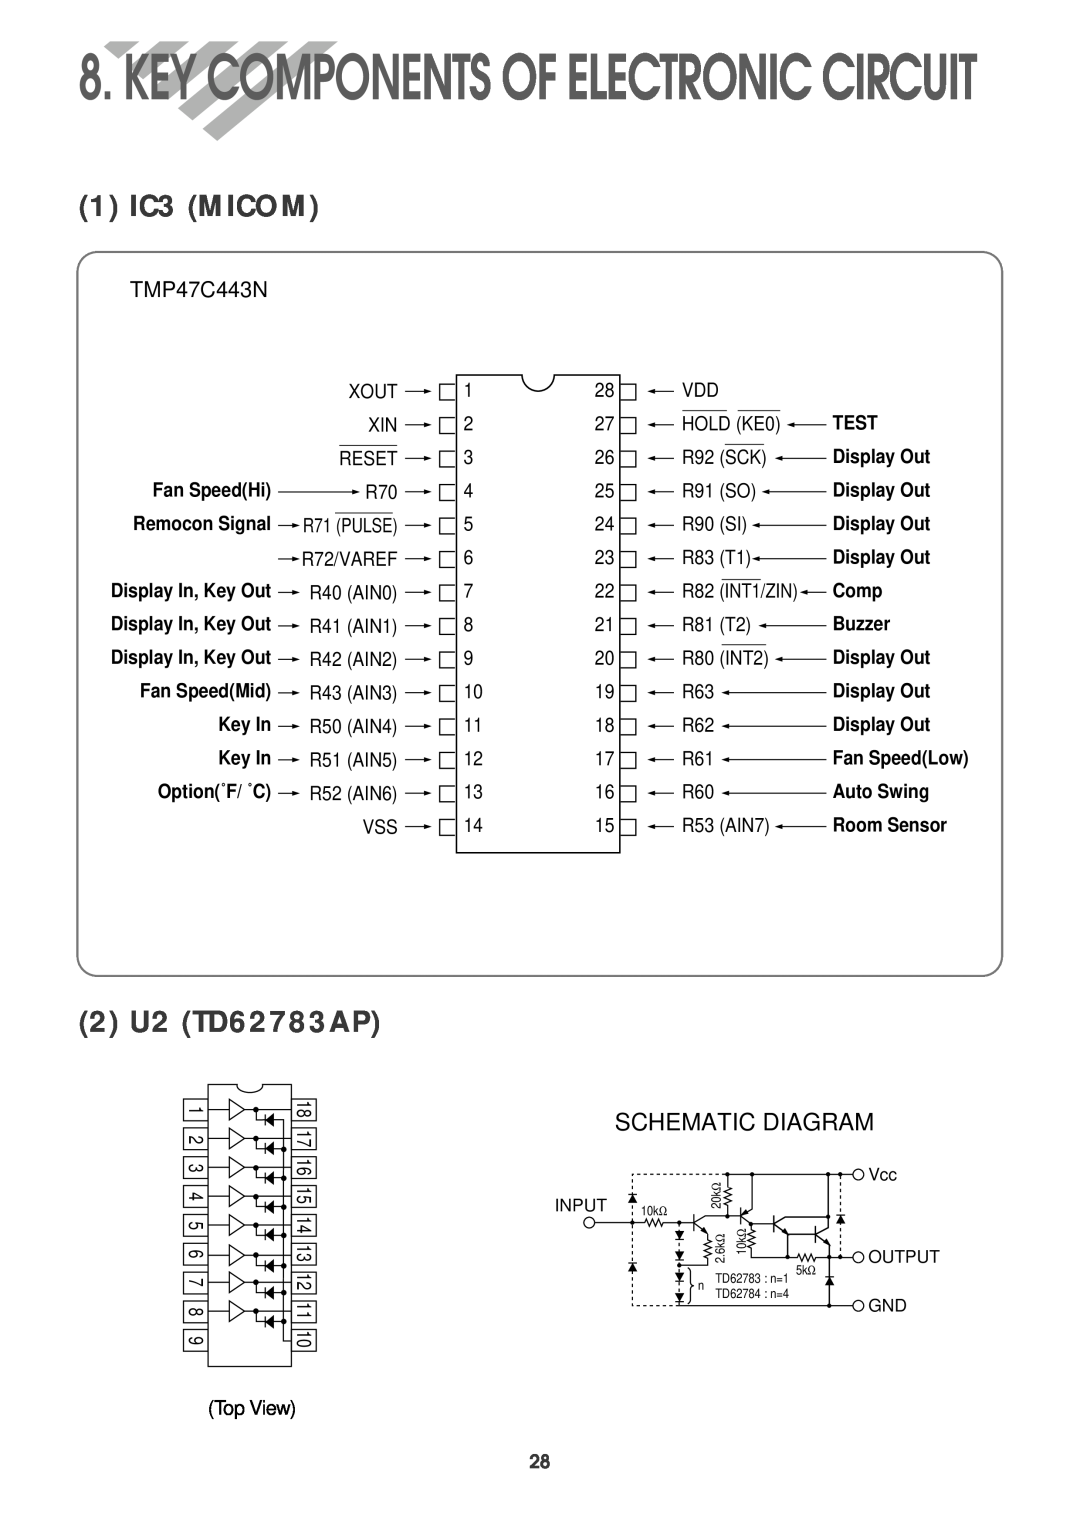 Daewoo DWC-121R 1IC3 MICOM, 2 U2 TD62783AP, Schematic Diagram, Key Components Of Electronic Circuit, TMP47C443N 